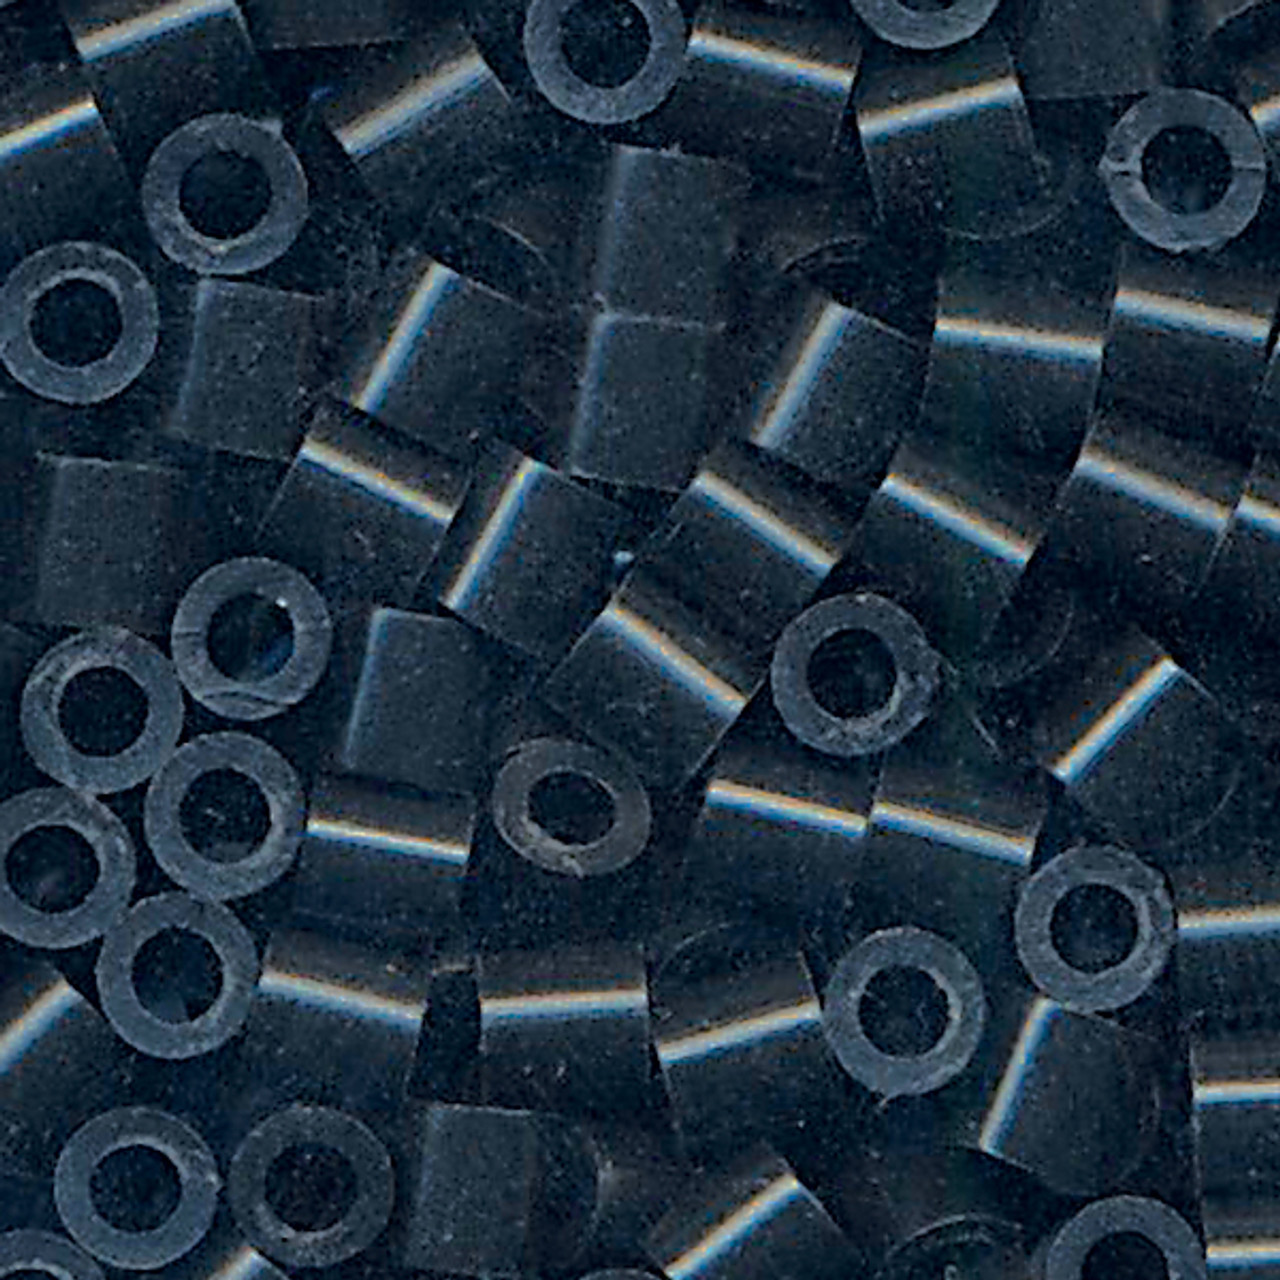 Hama Beads Black (1000 Midi Beads)